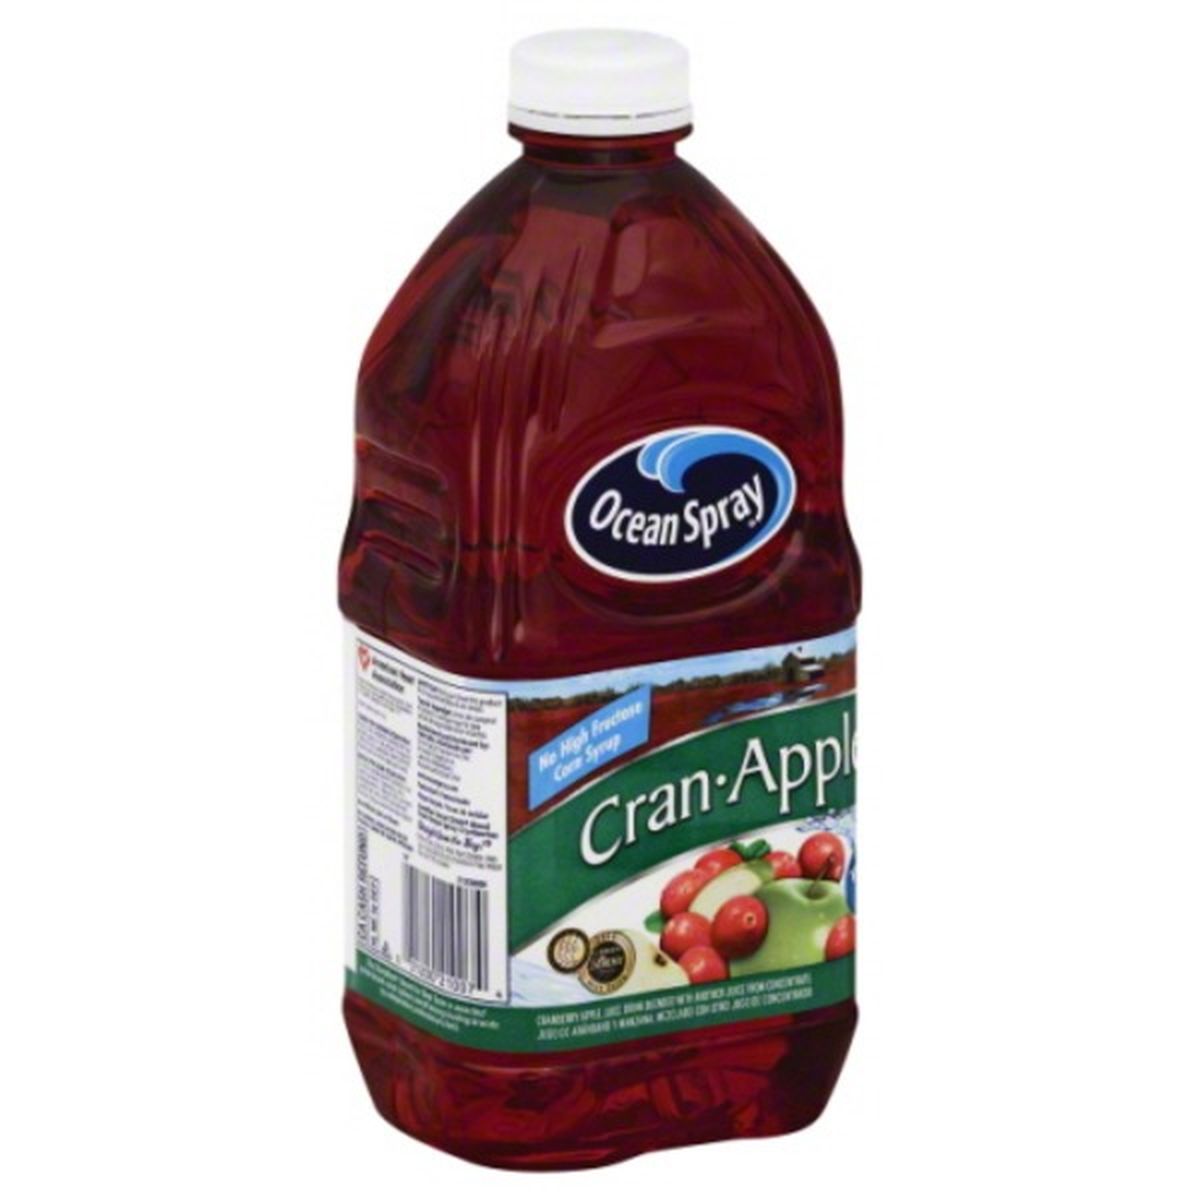 Calories in Ocean Spray Juice Drink, Cran-Apple